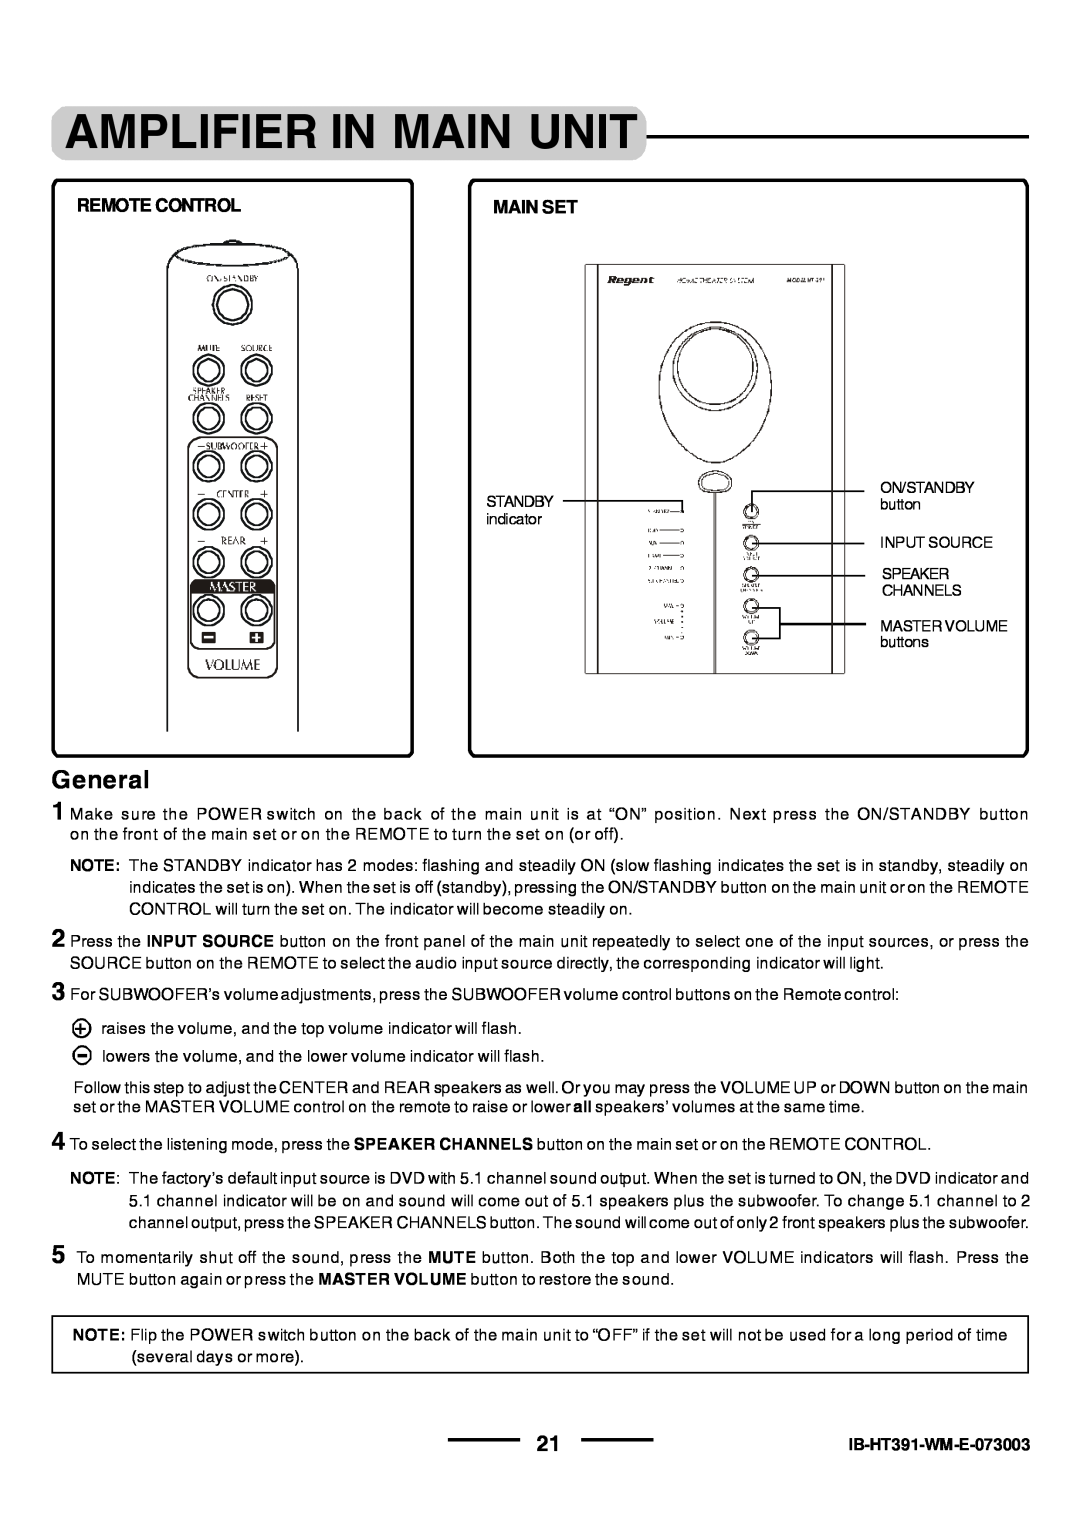 Lenoxx Electronics HT-391 manual Amplifier In Main Unit, General, IB-HT391-WM-E-073003 